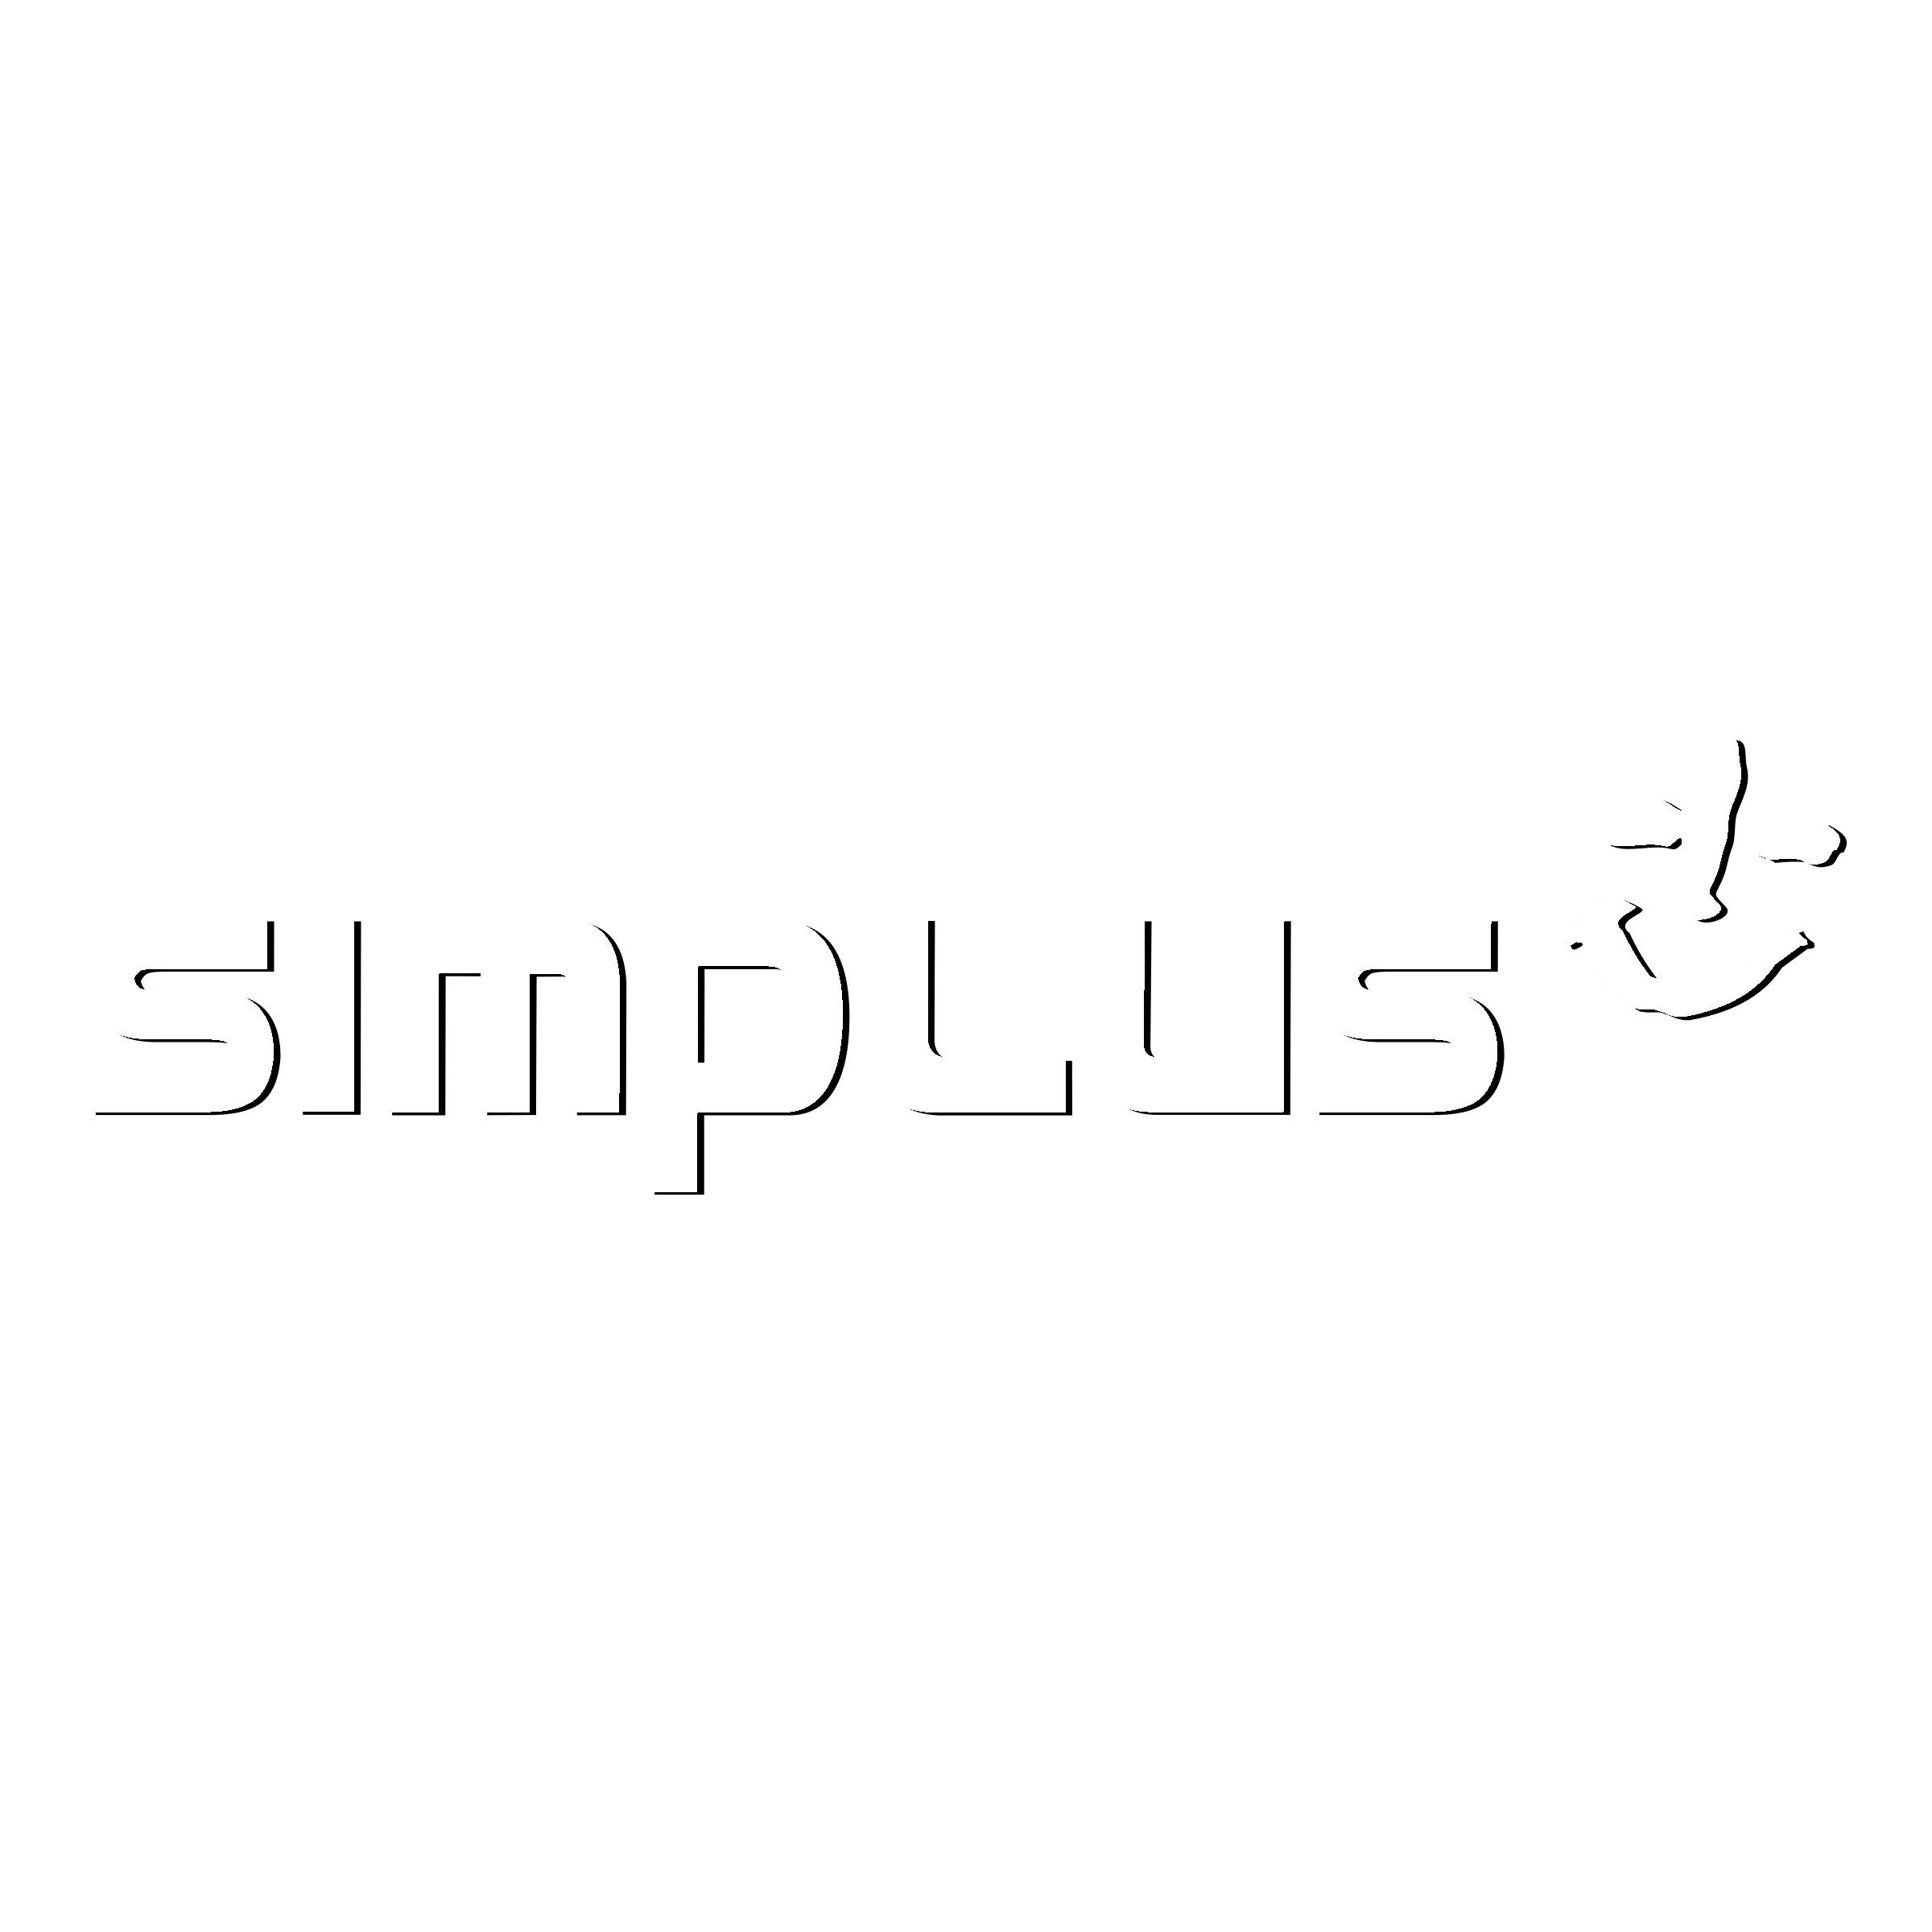 simplus logo black and white